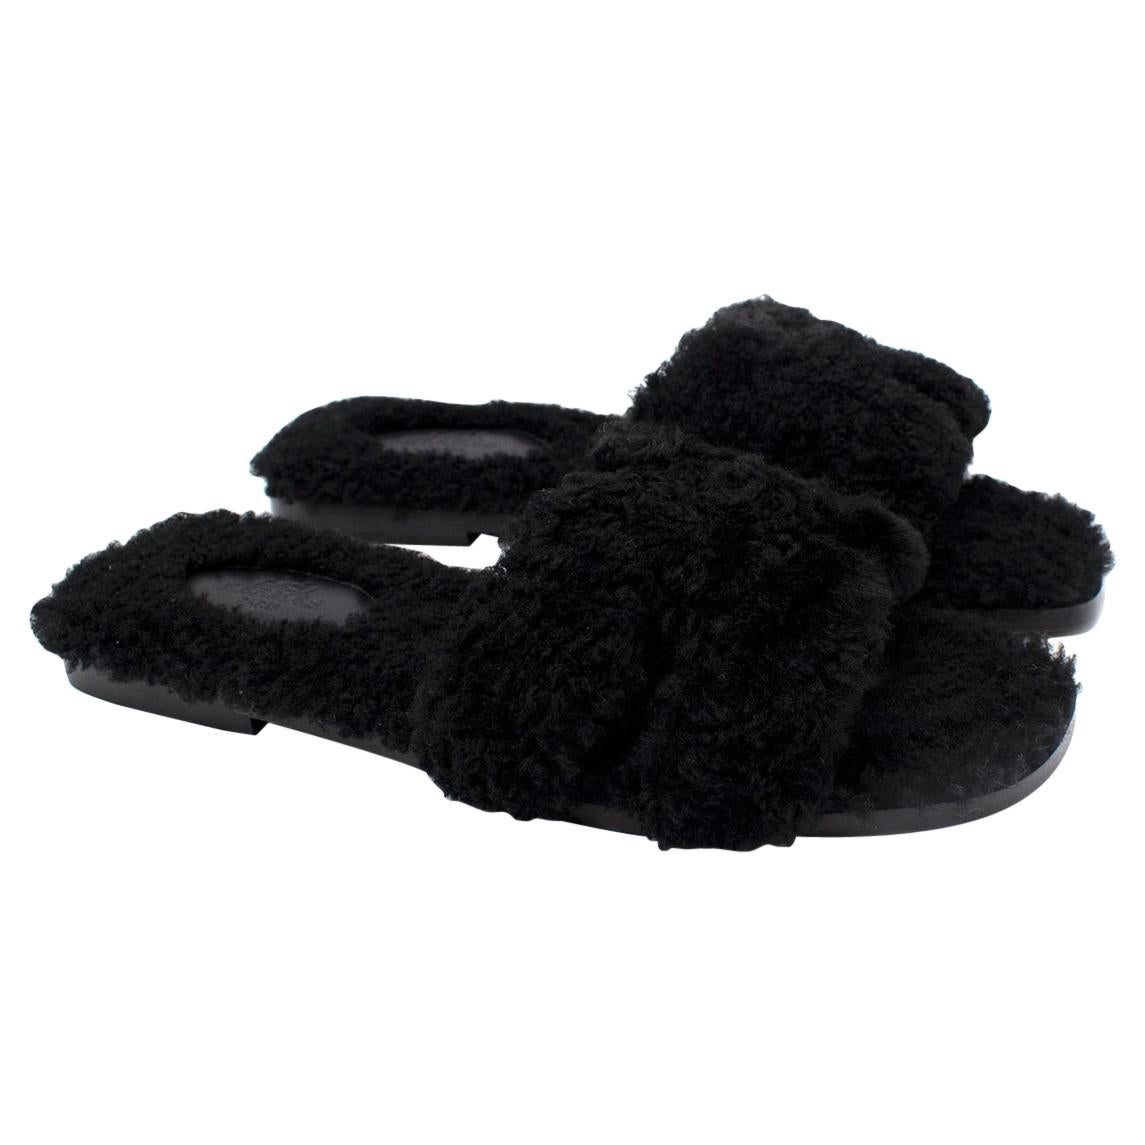 Hermes Black Fluffy Shearling Oran Sandal - Discontinued/Rare - Us size 9.5